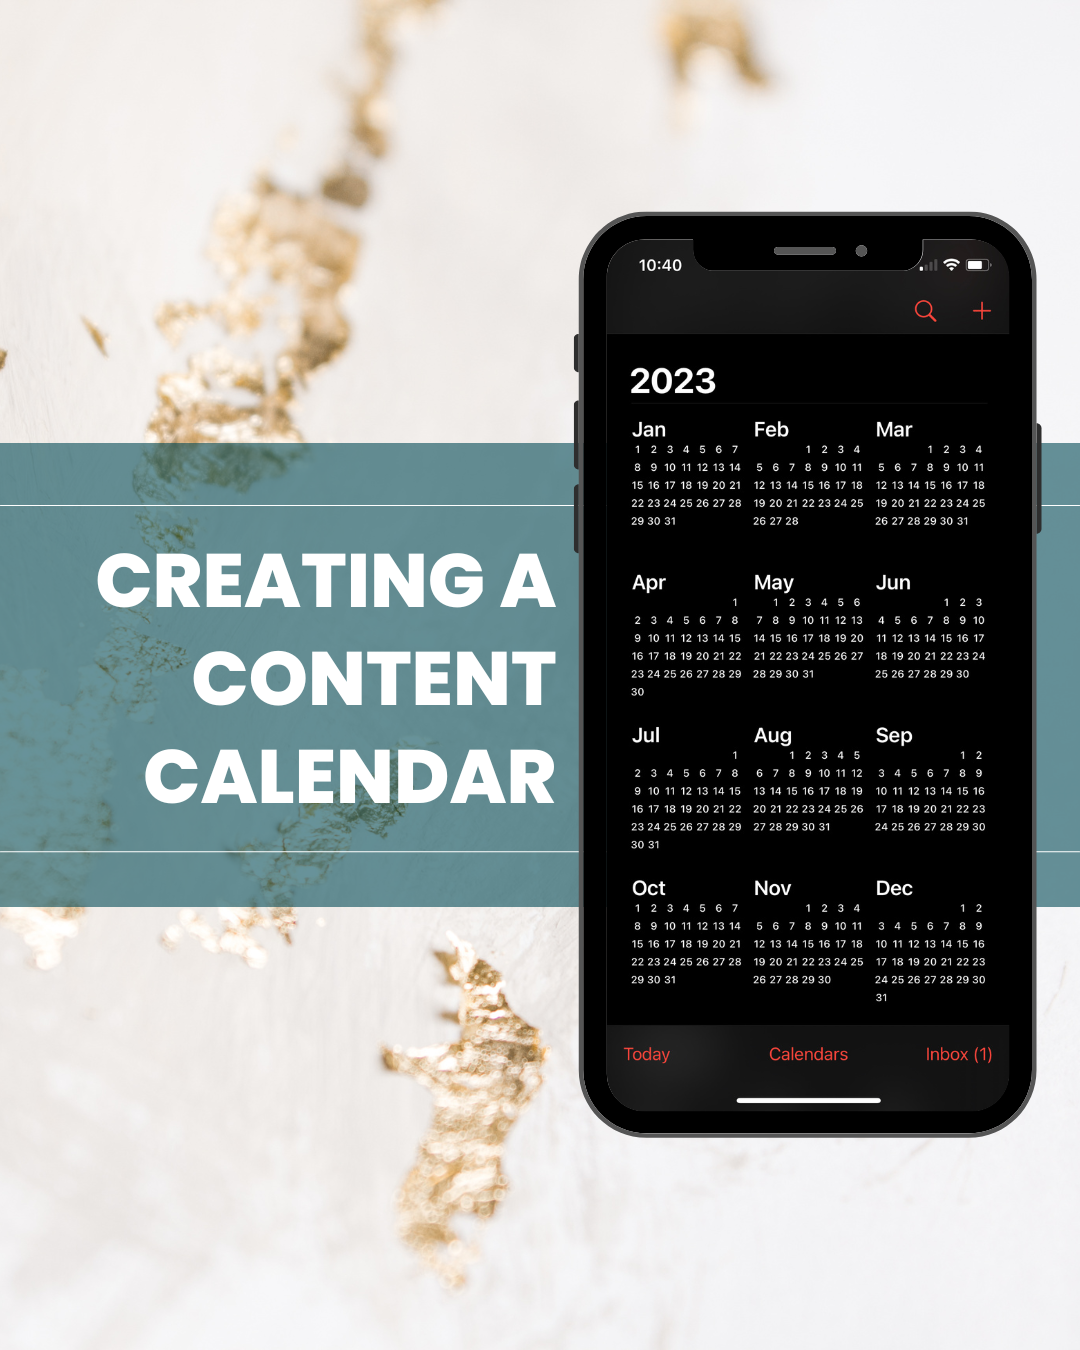 Creating a content calendar